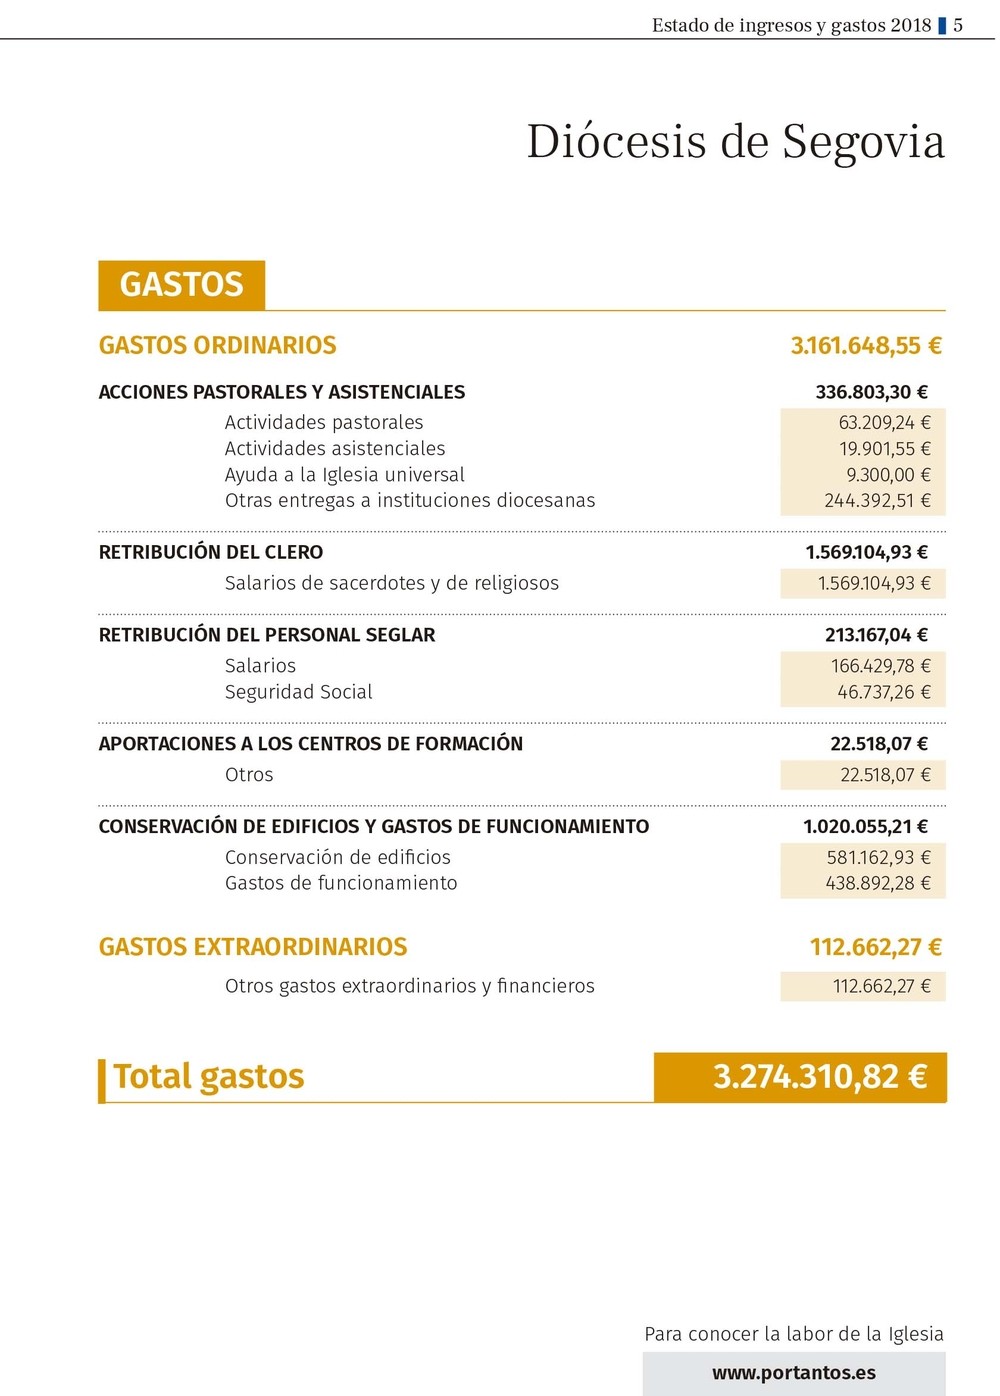 La Iglesia gastó en 2018  en Segovia 3,2 millones de euros